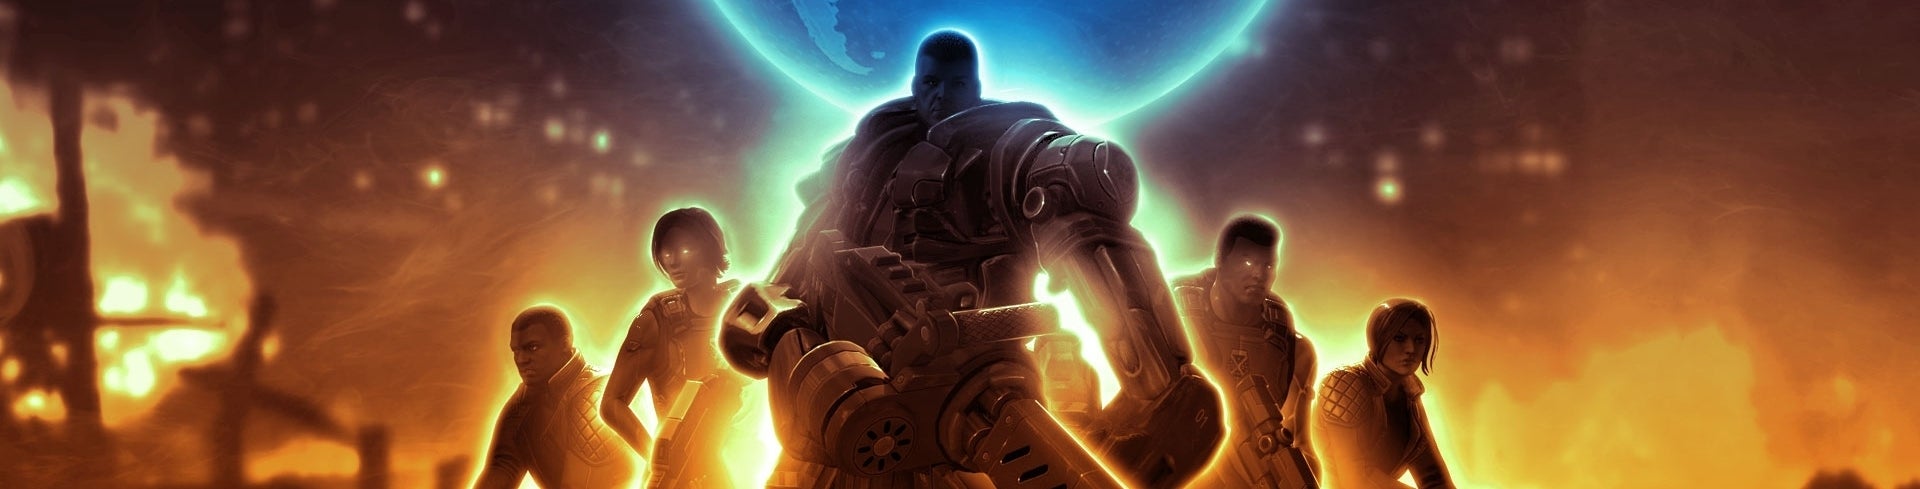 Obrazki dla XCOM: Enemy Within - Recenzja